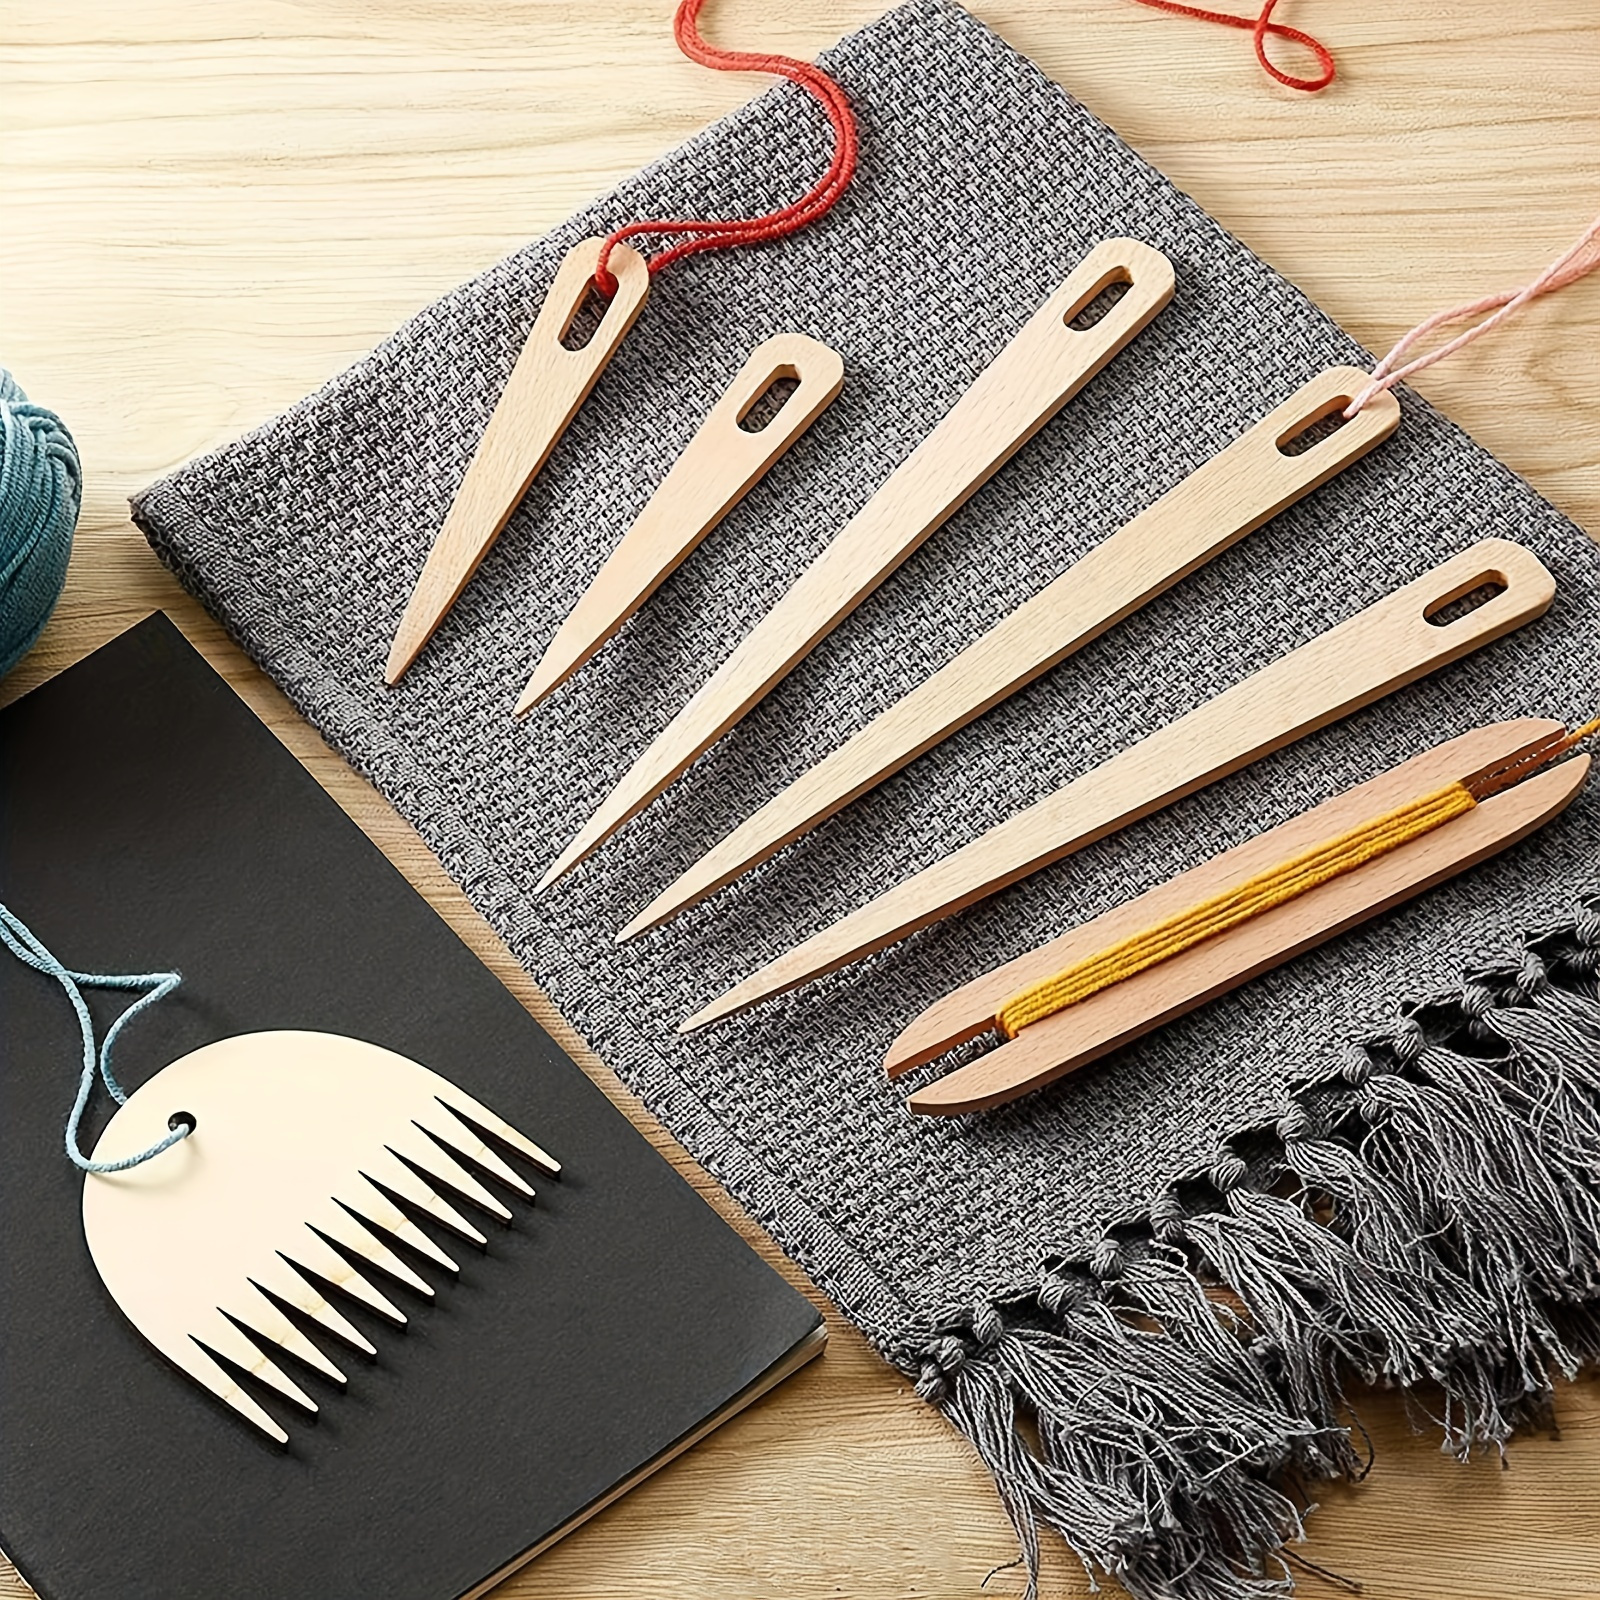  Loom Knit Hook Set, Crochet Needle Hook Kit, 8 Pcs